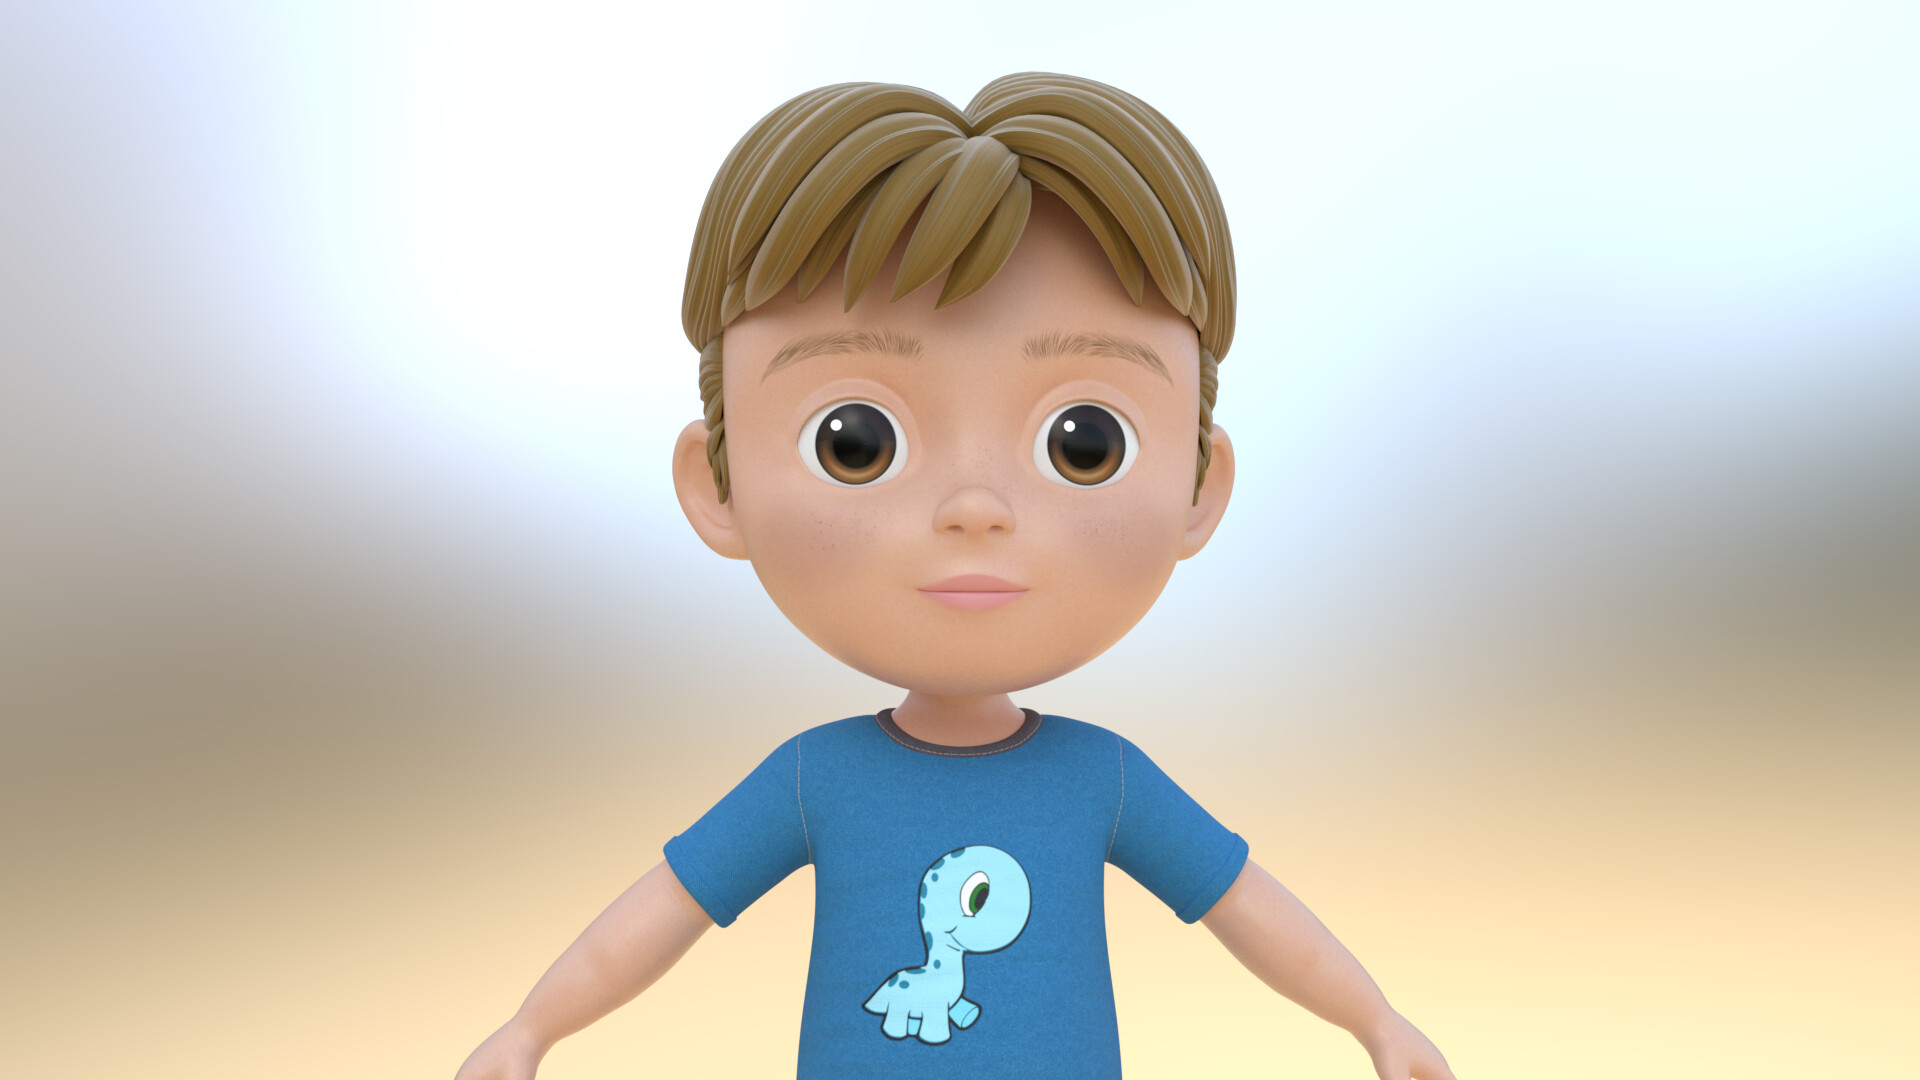 ArtStation - julian cartoon character 3D model